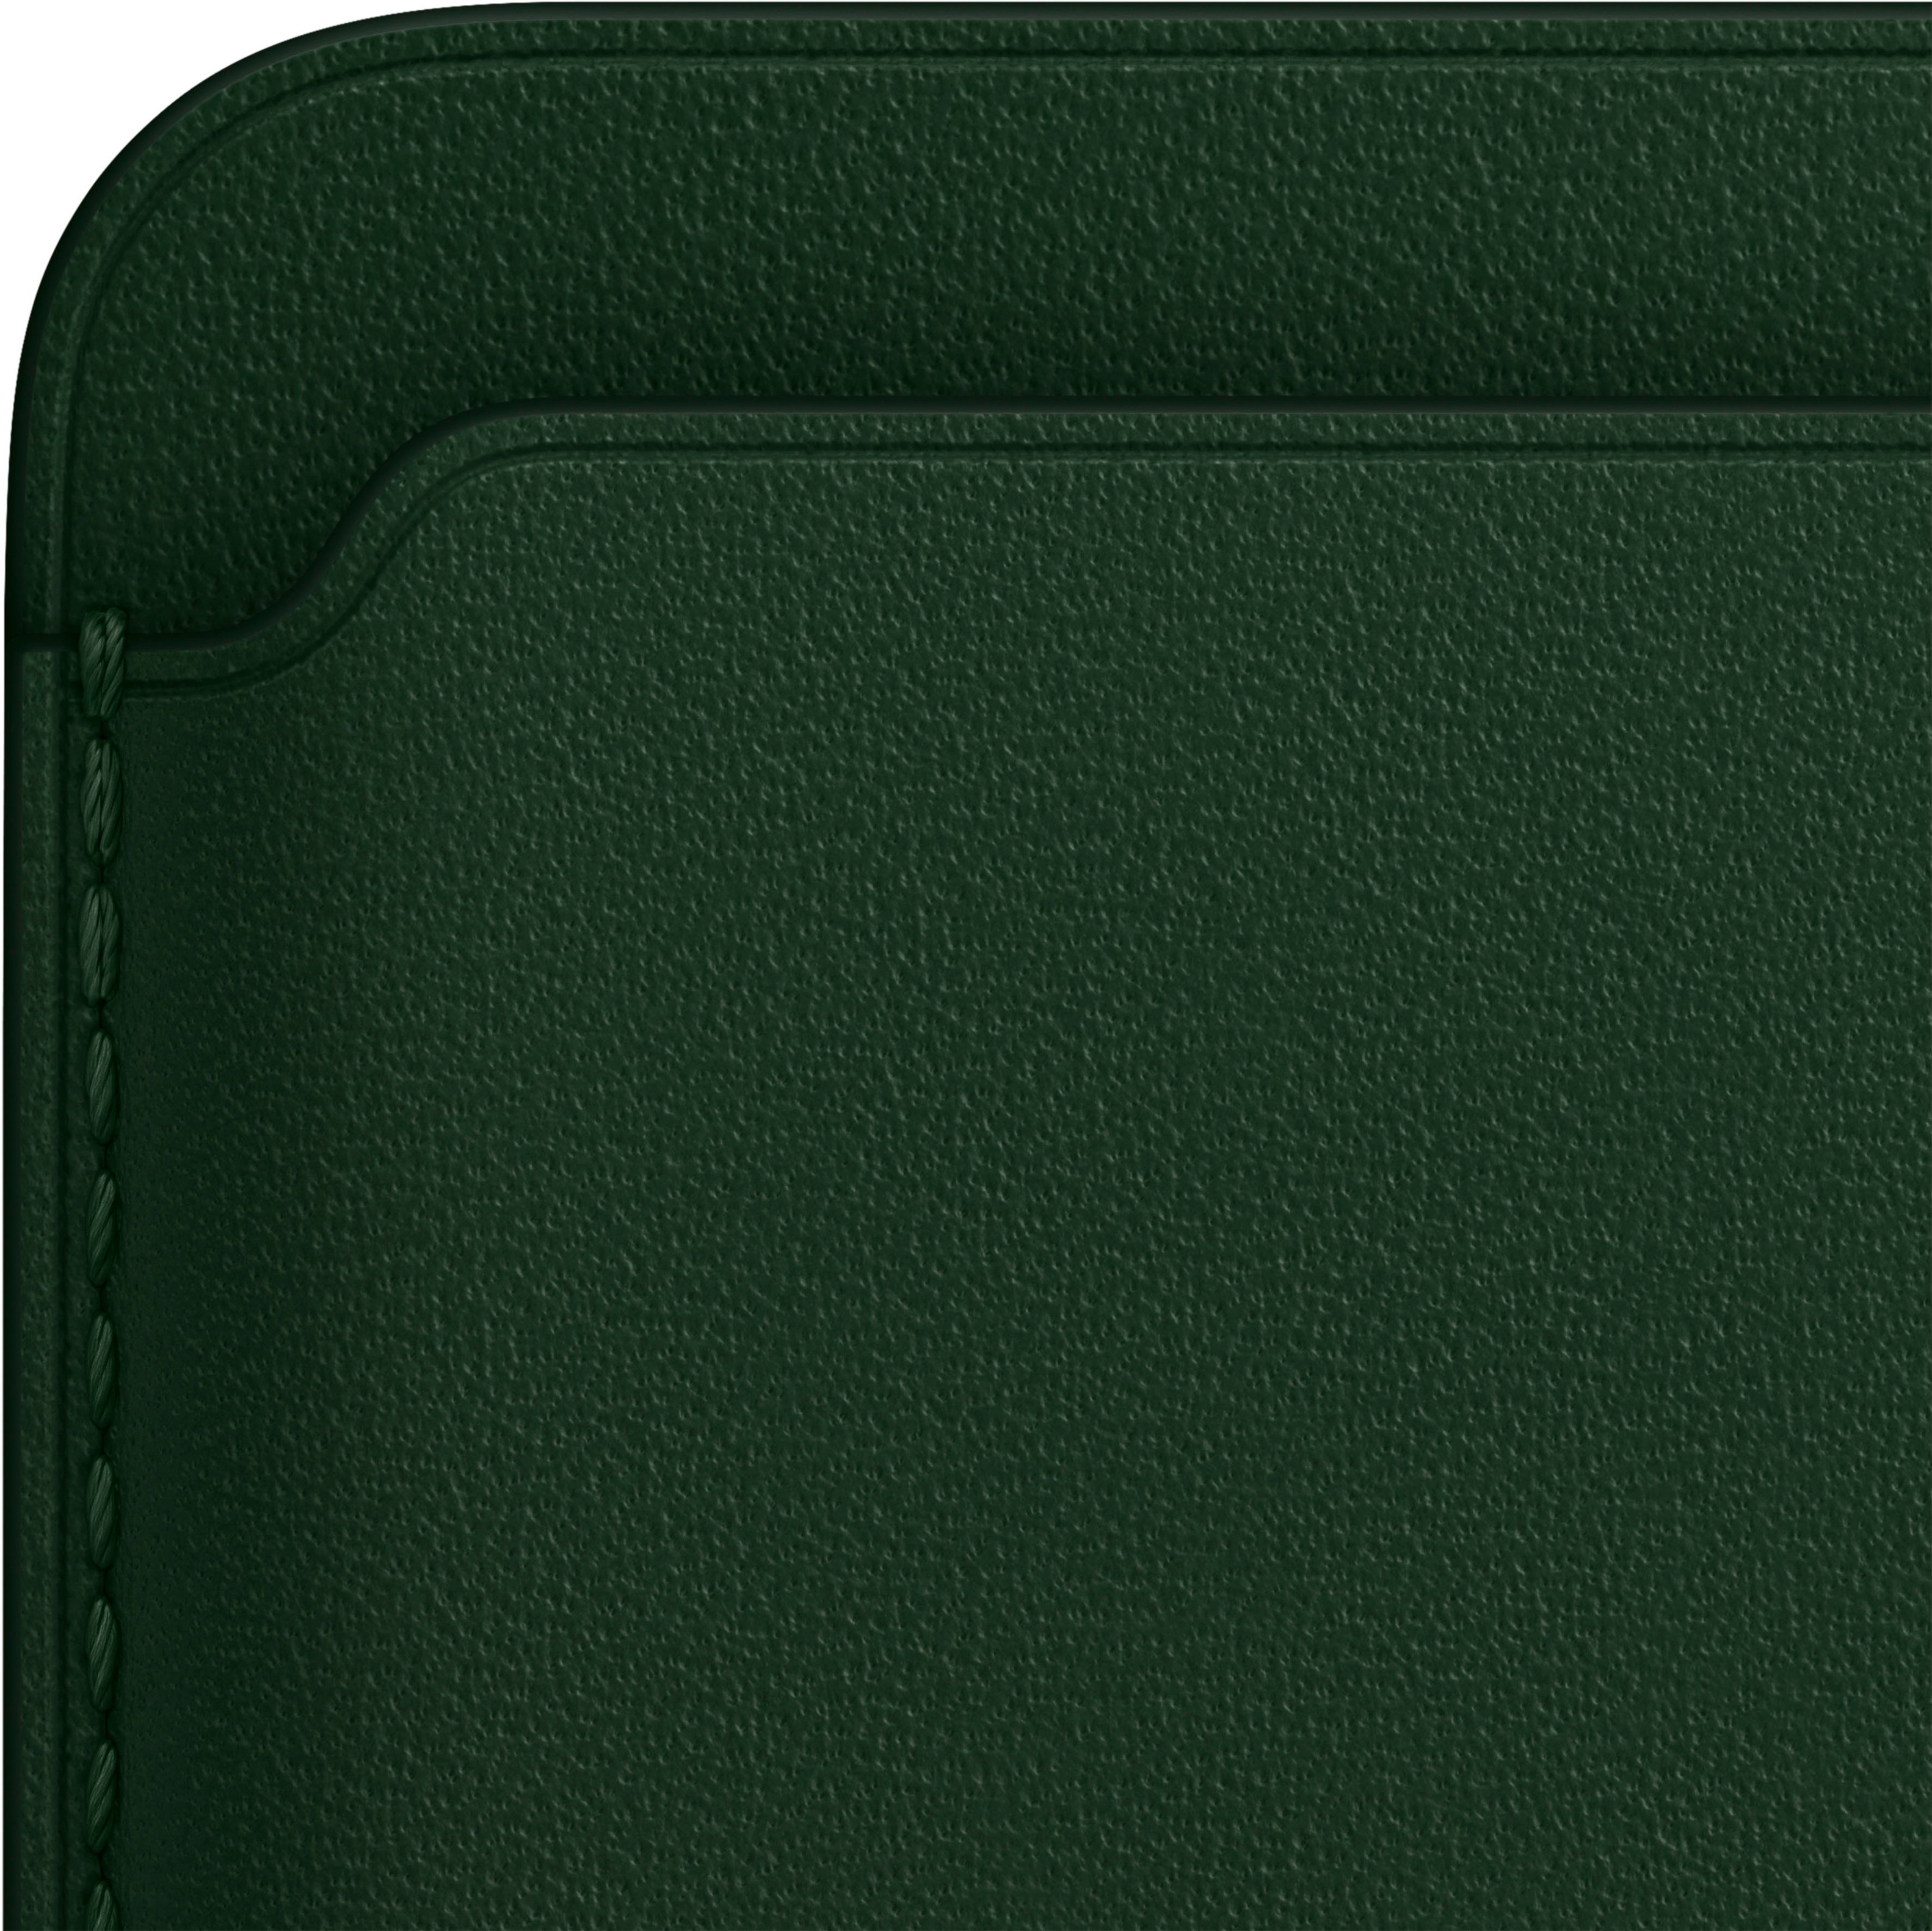 Magsafe Leather Designer Wallet - Small Font - Dark Green